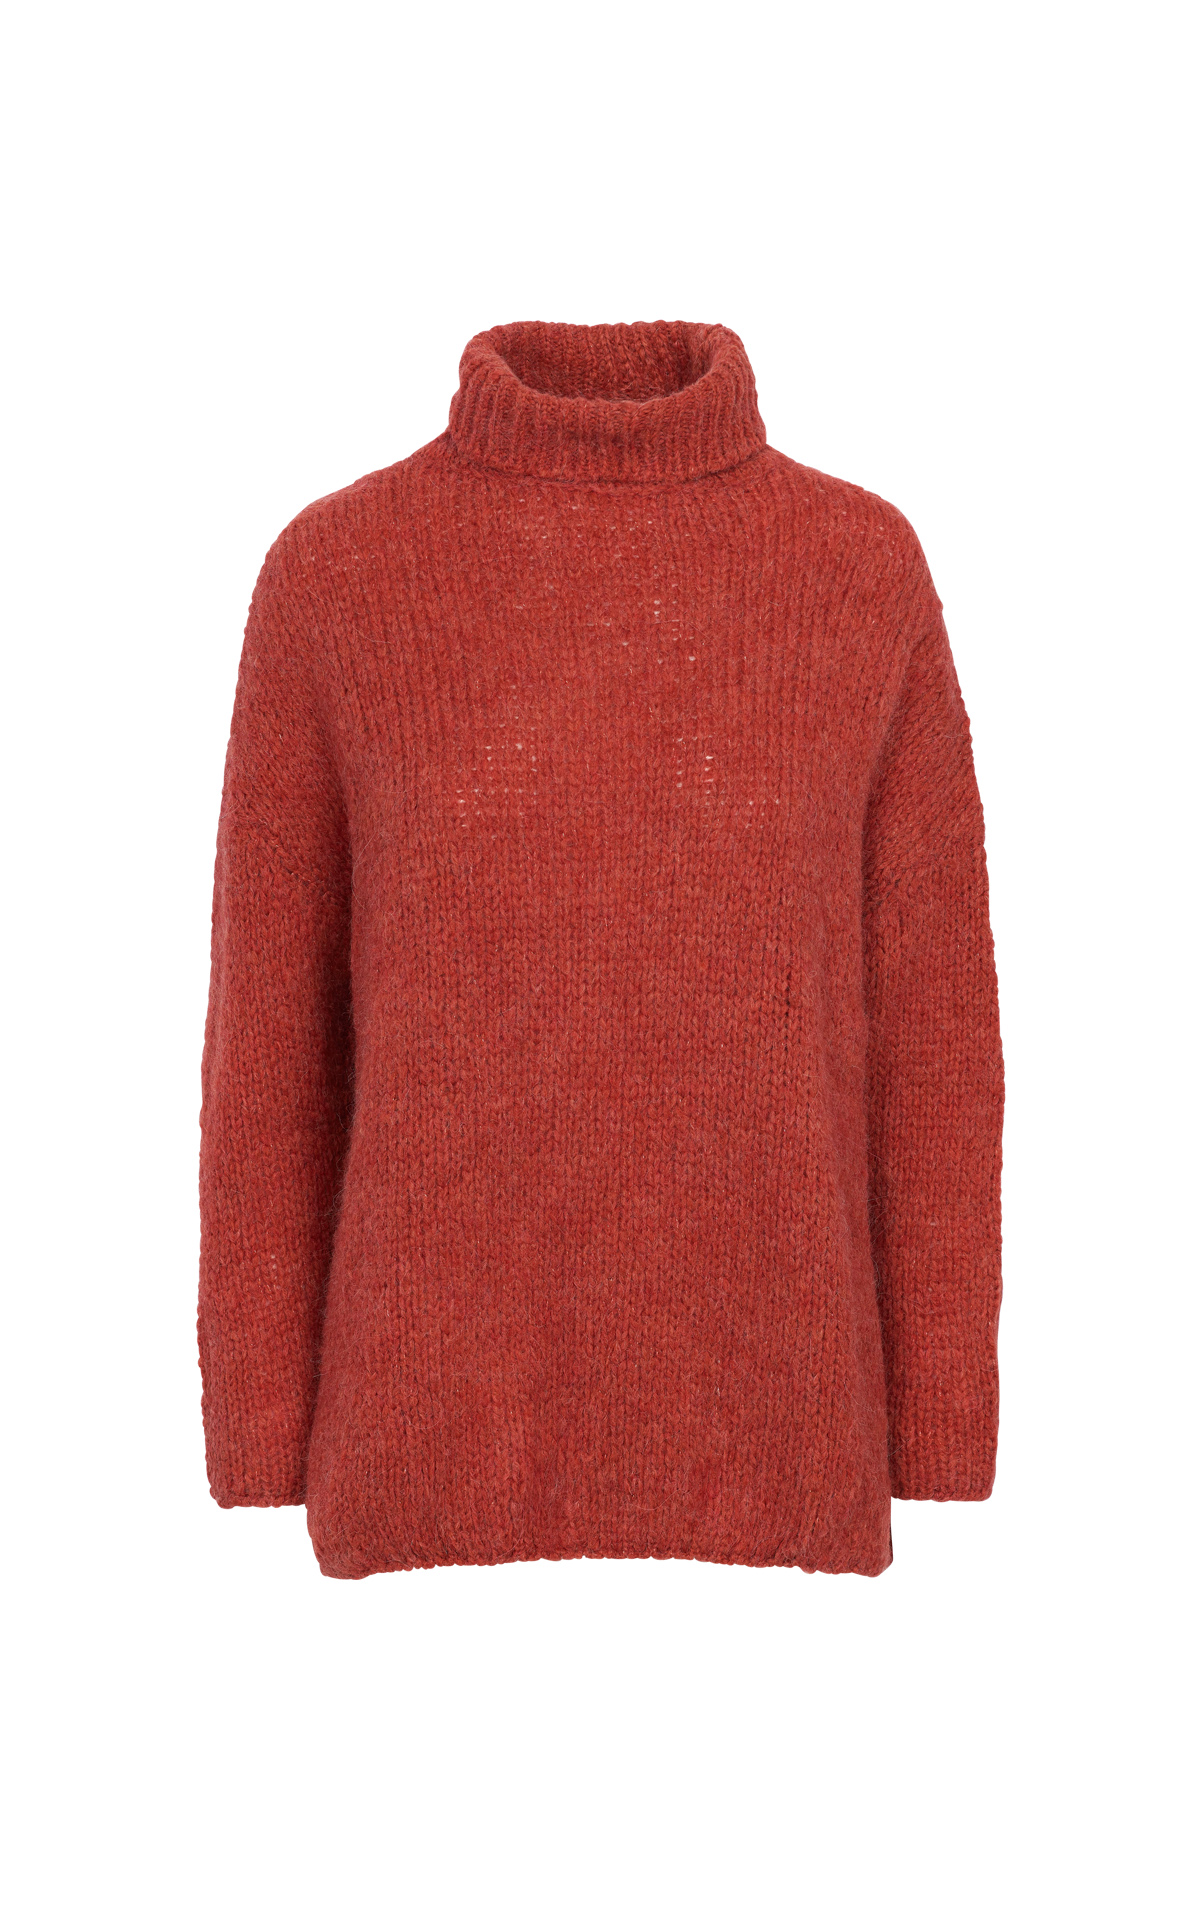 American Vintage Red turtleneck sweater